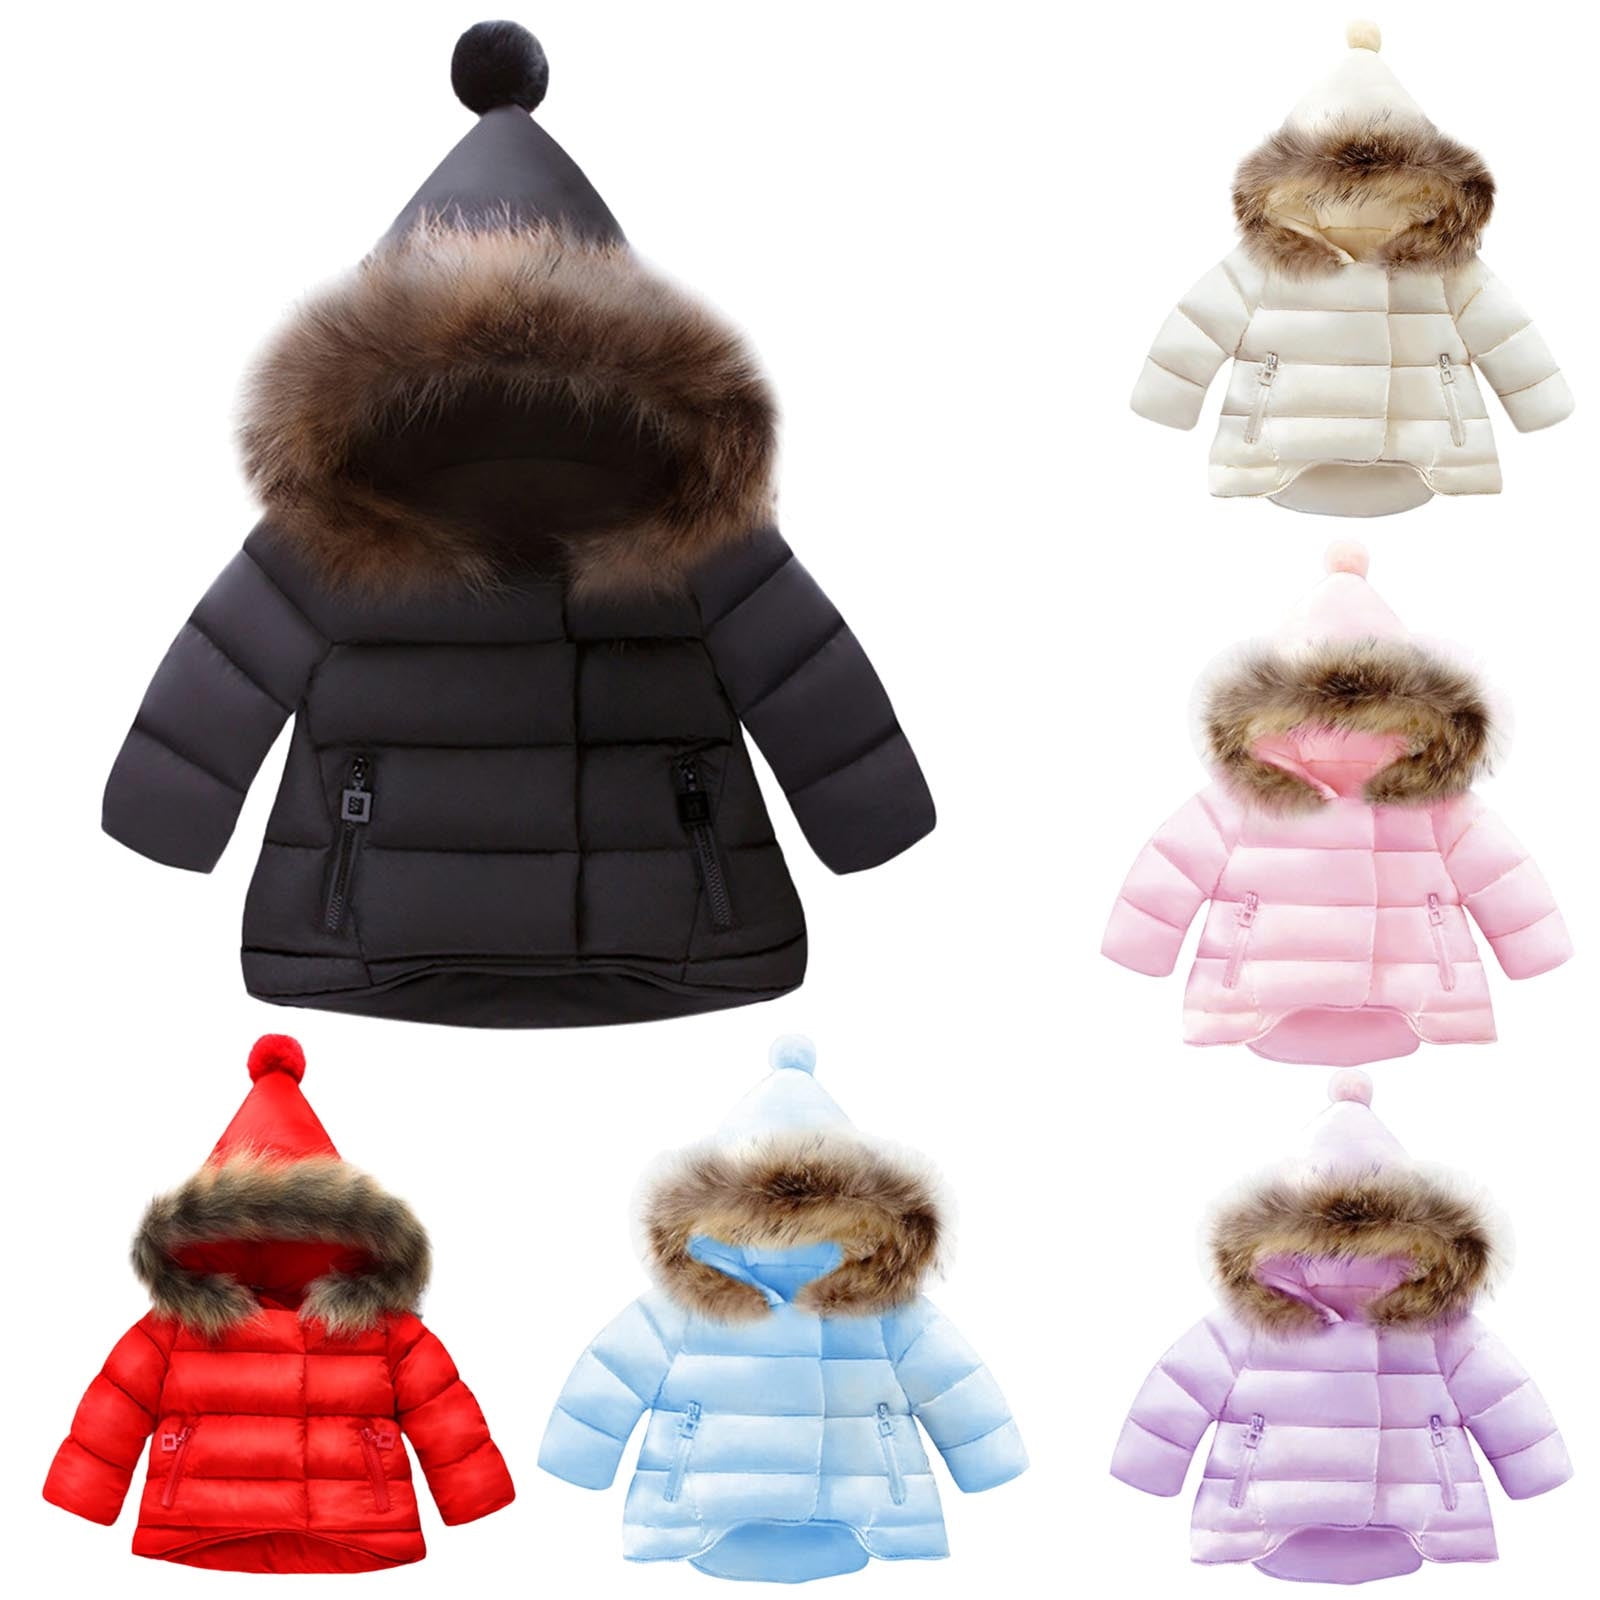 Kids Girls Newborn Baby Toddler Winter Hooded Coat Outerwear Jacket Clothes HOT 